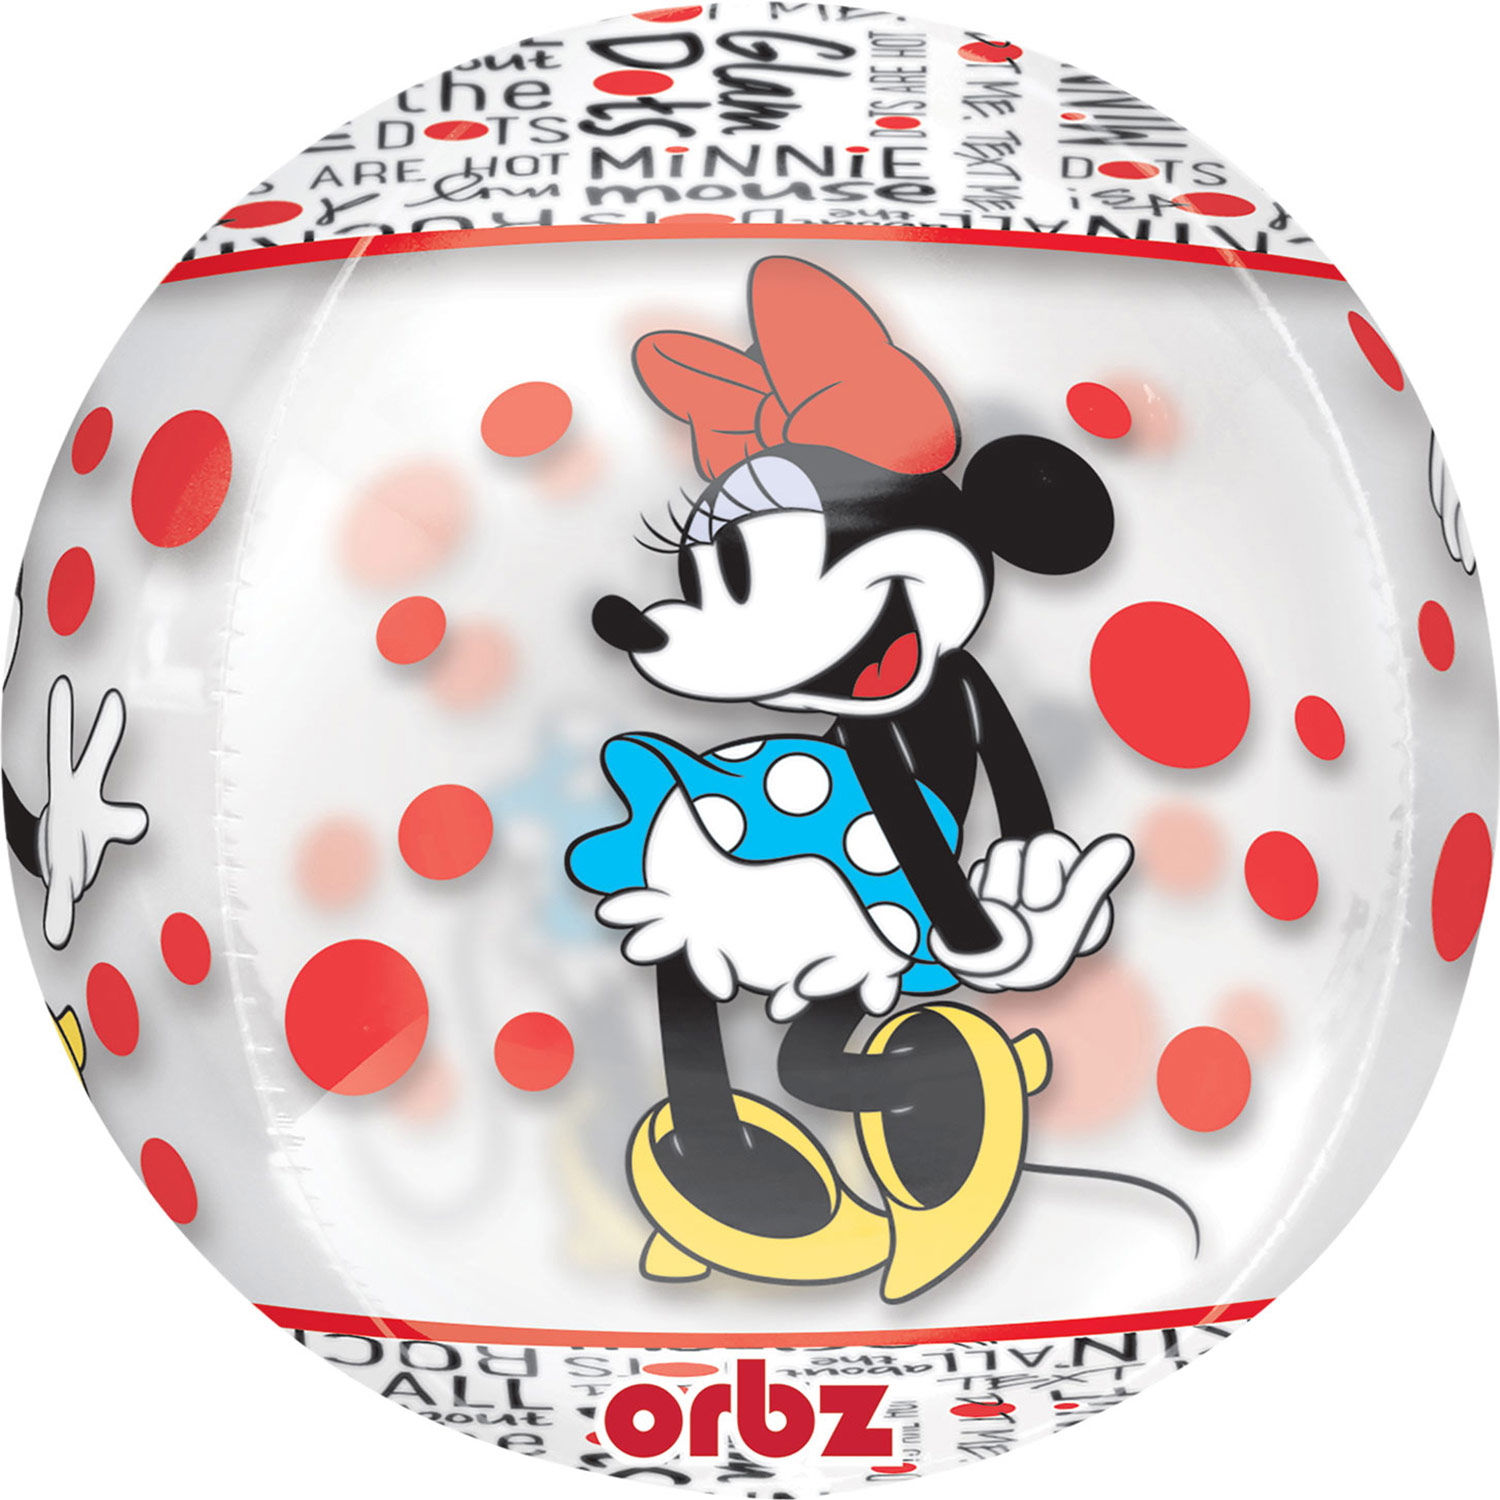 Ballon alu Orbz  Mickey 1er Anniversaire 38 cm X 40 cmBallon alu Orbz  Minnie 1er Anniversaire 38 cm X 40 cm